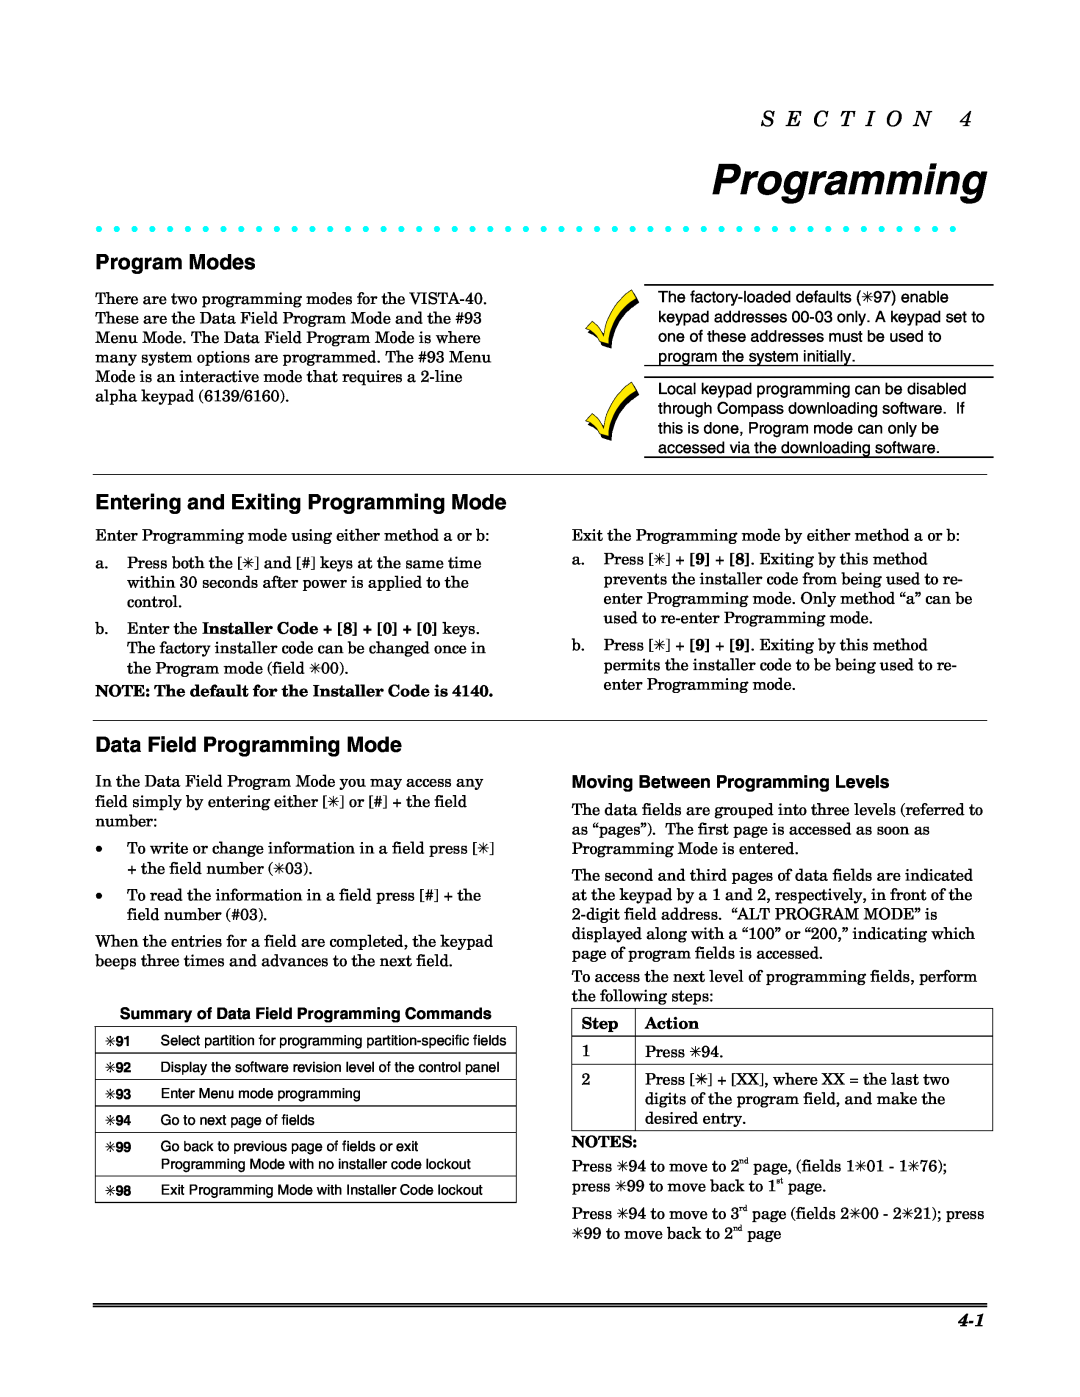 Honeywell 3.5 manual Program Modes, Entering and Exiting Programming Mode, Data Field Programming Mode, S E C T I O N 